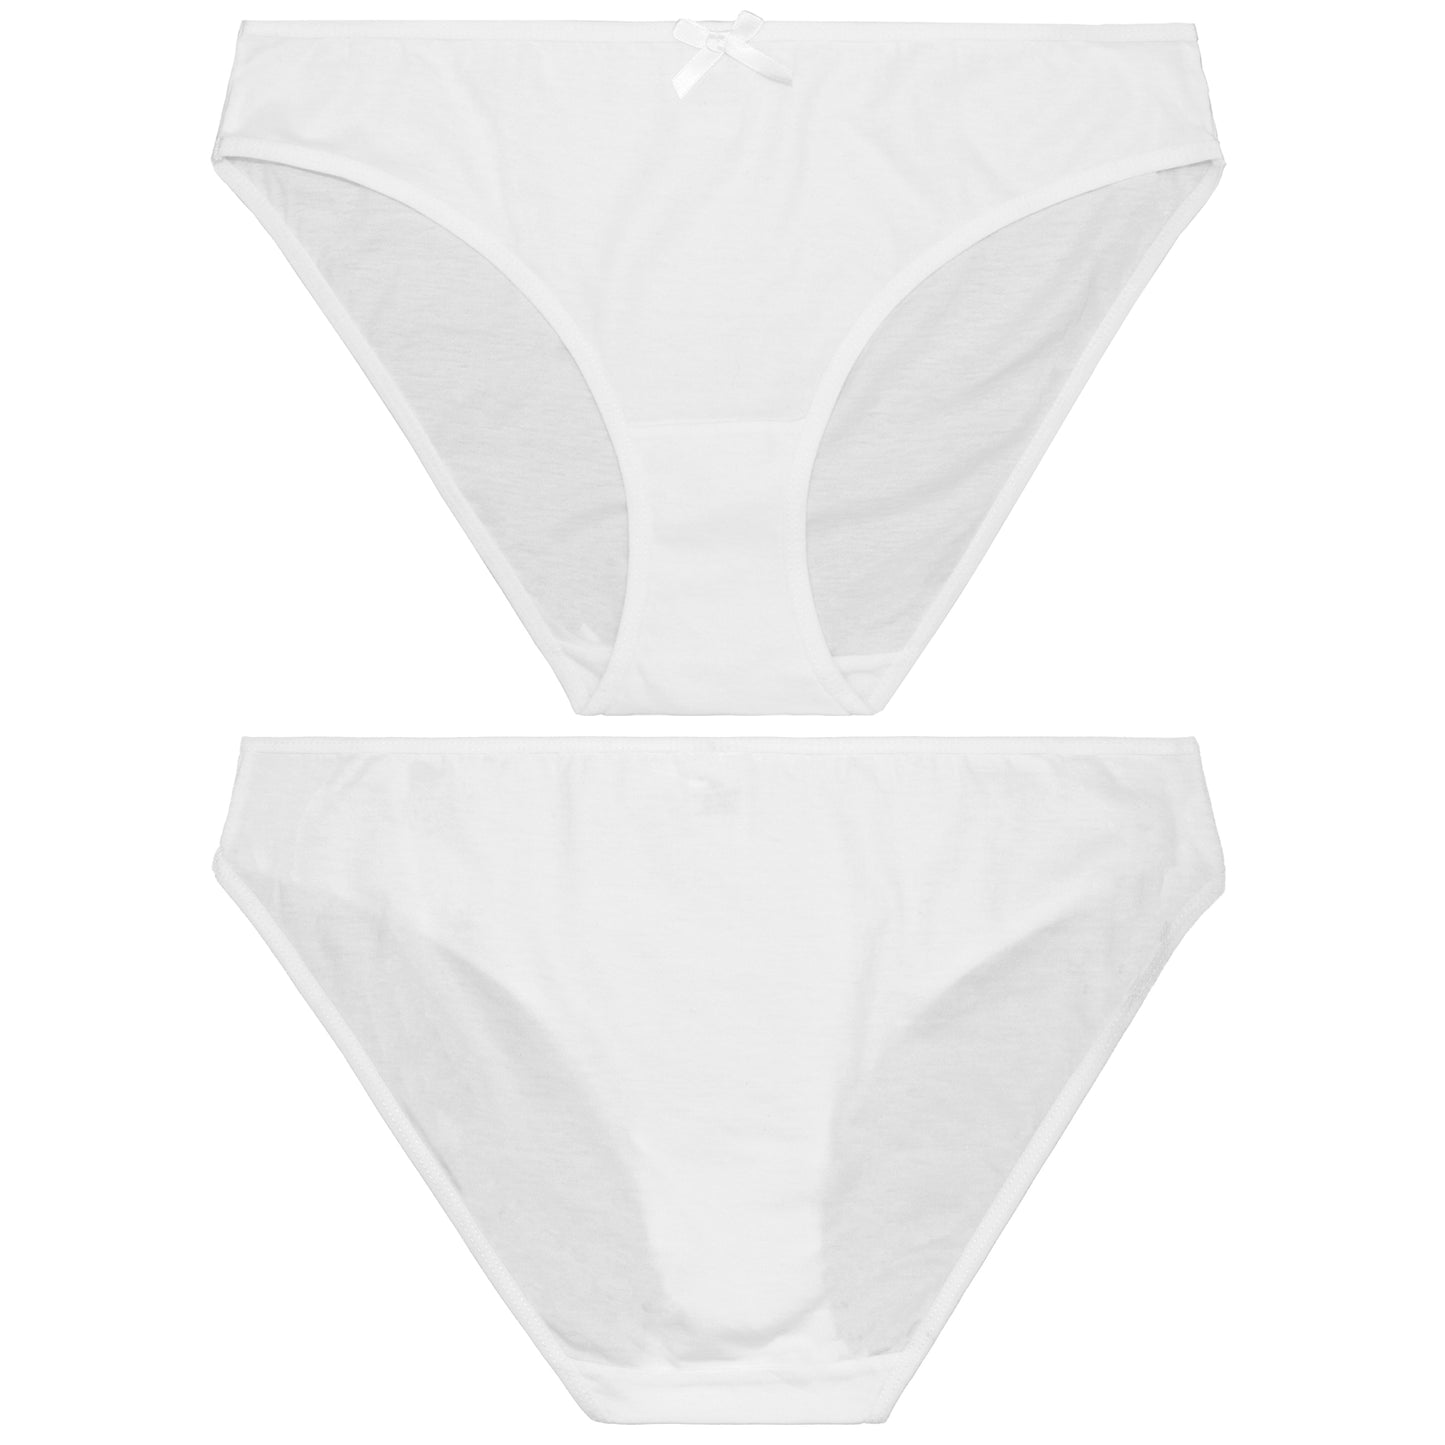  XWSM 2PCS 100% Cotton Underwear Plus Size Panties For